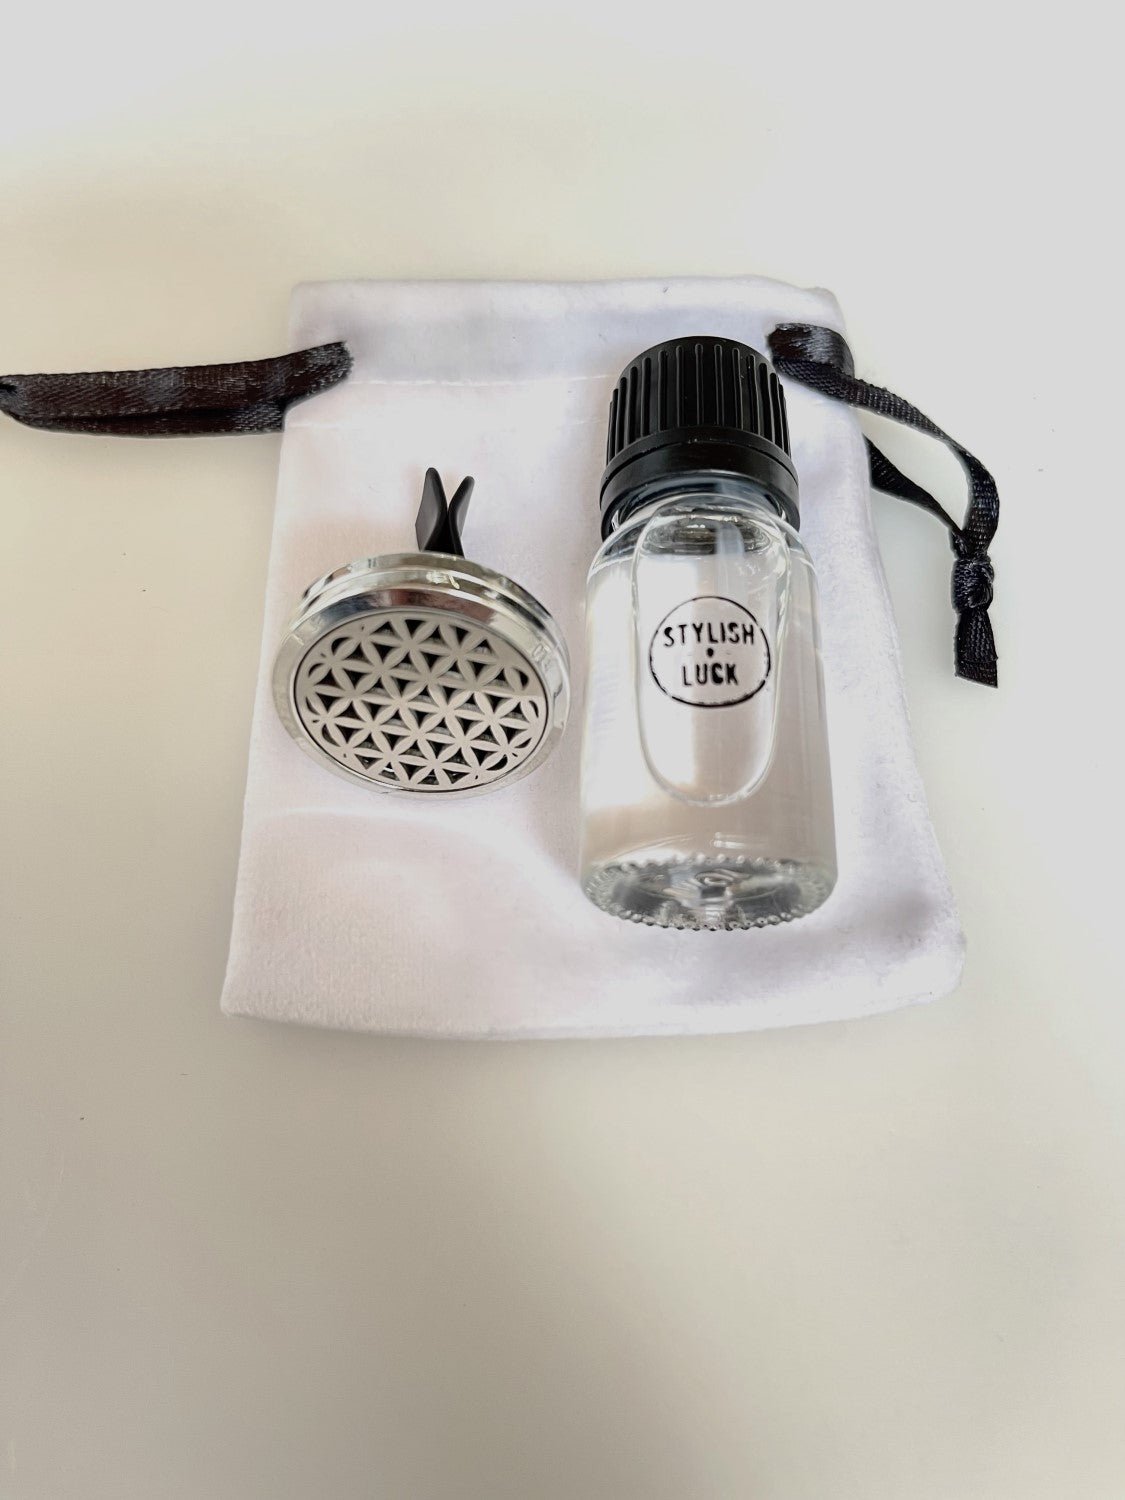 Hamsa aromatherapy Car Perfume Diffuser - Stylish Luck Home Decor | Hamsa \ Hand Of Fatima | Good Luck Gifts